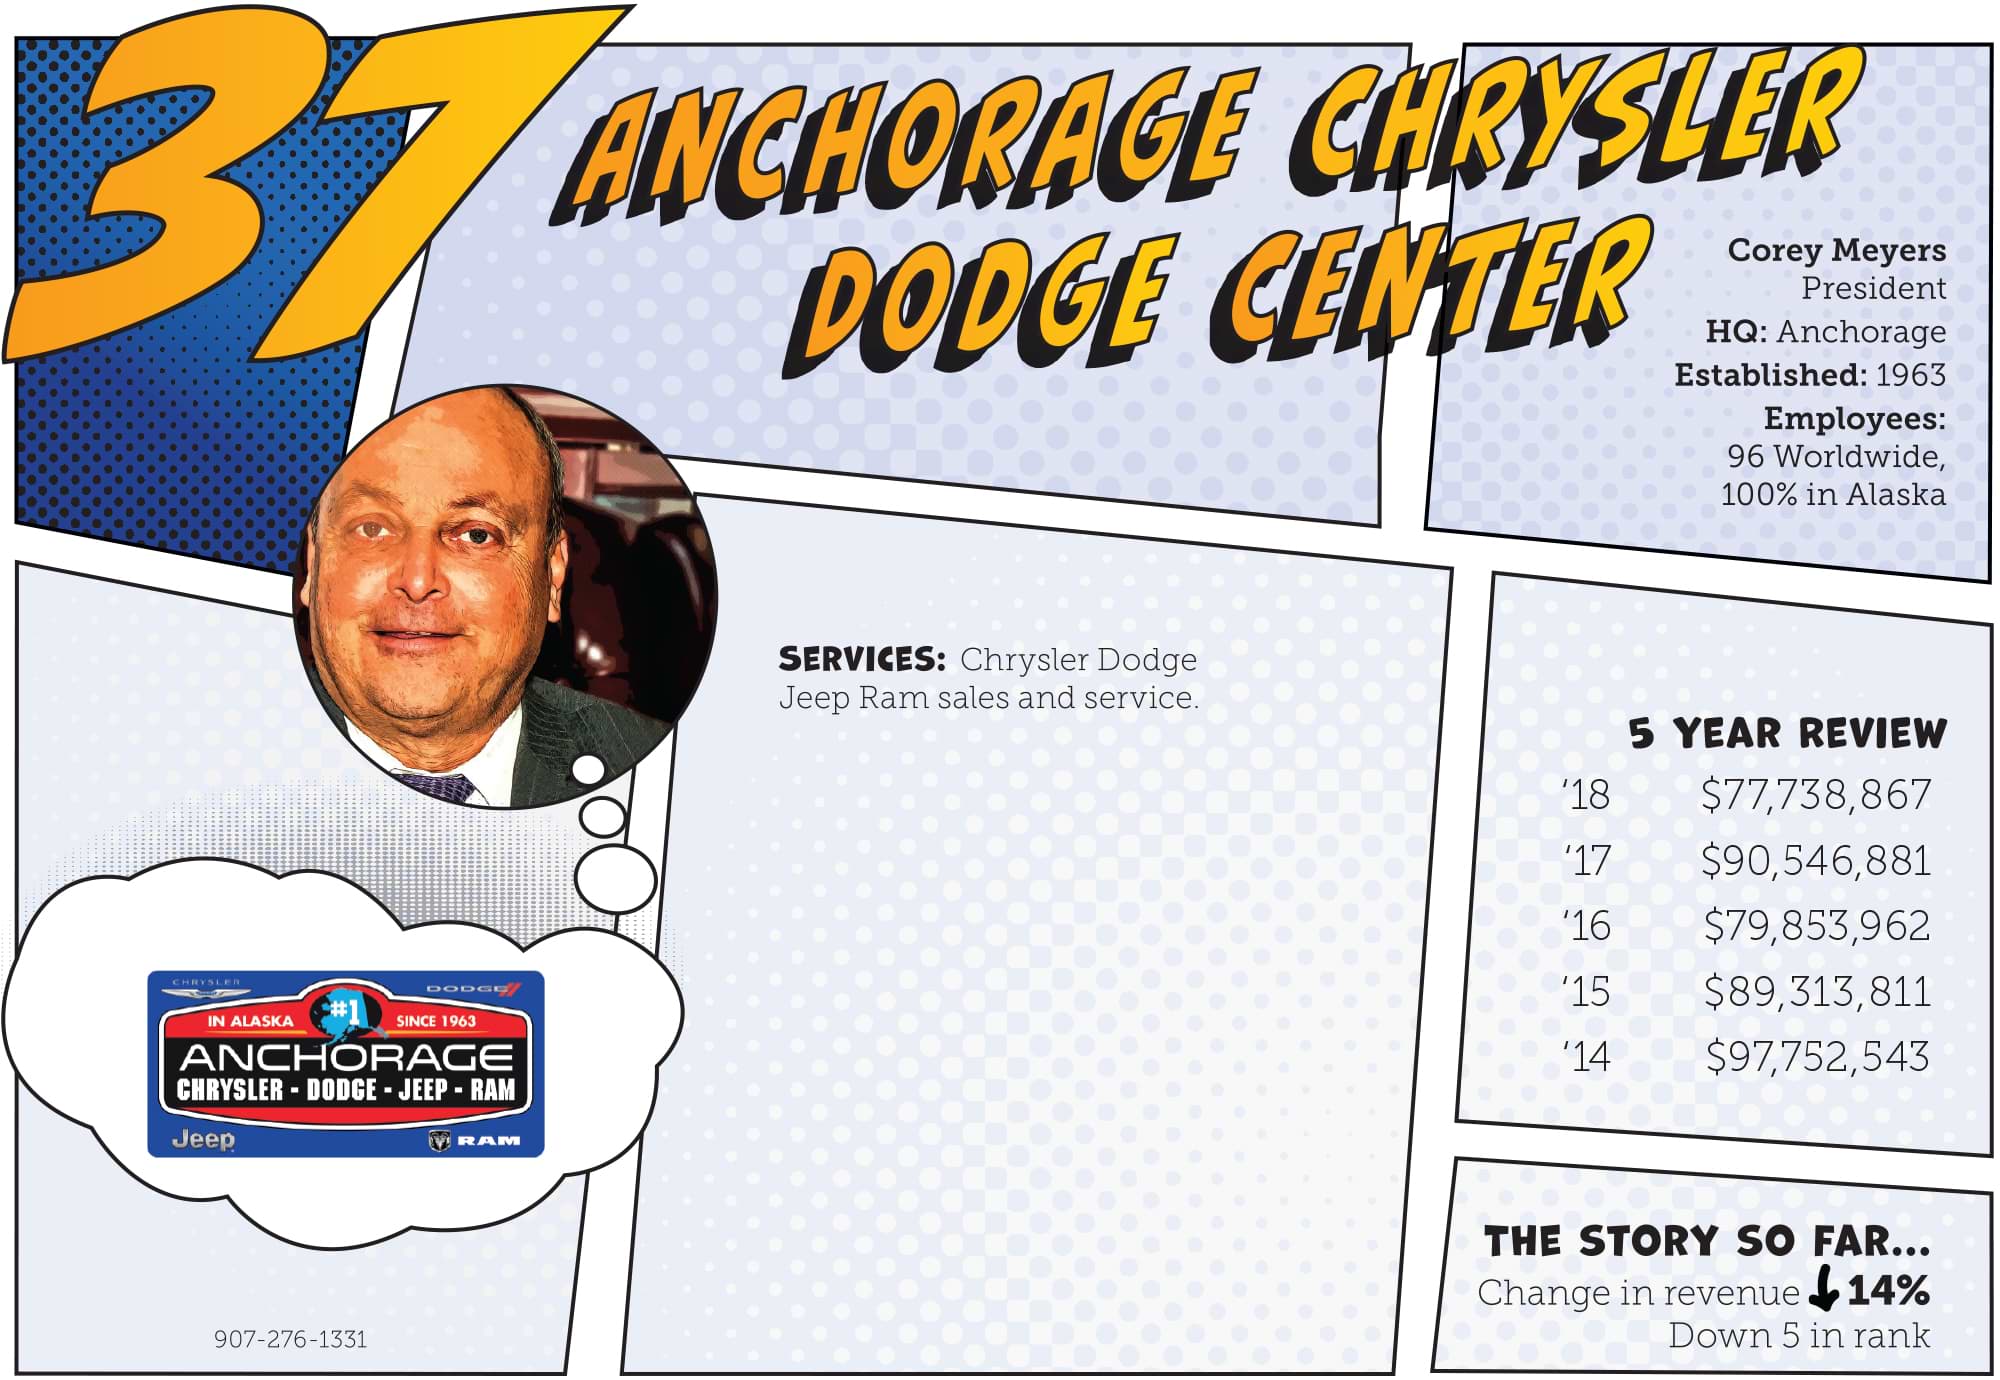 Anchorage Chrysler Dodge Center